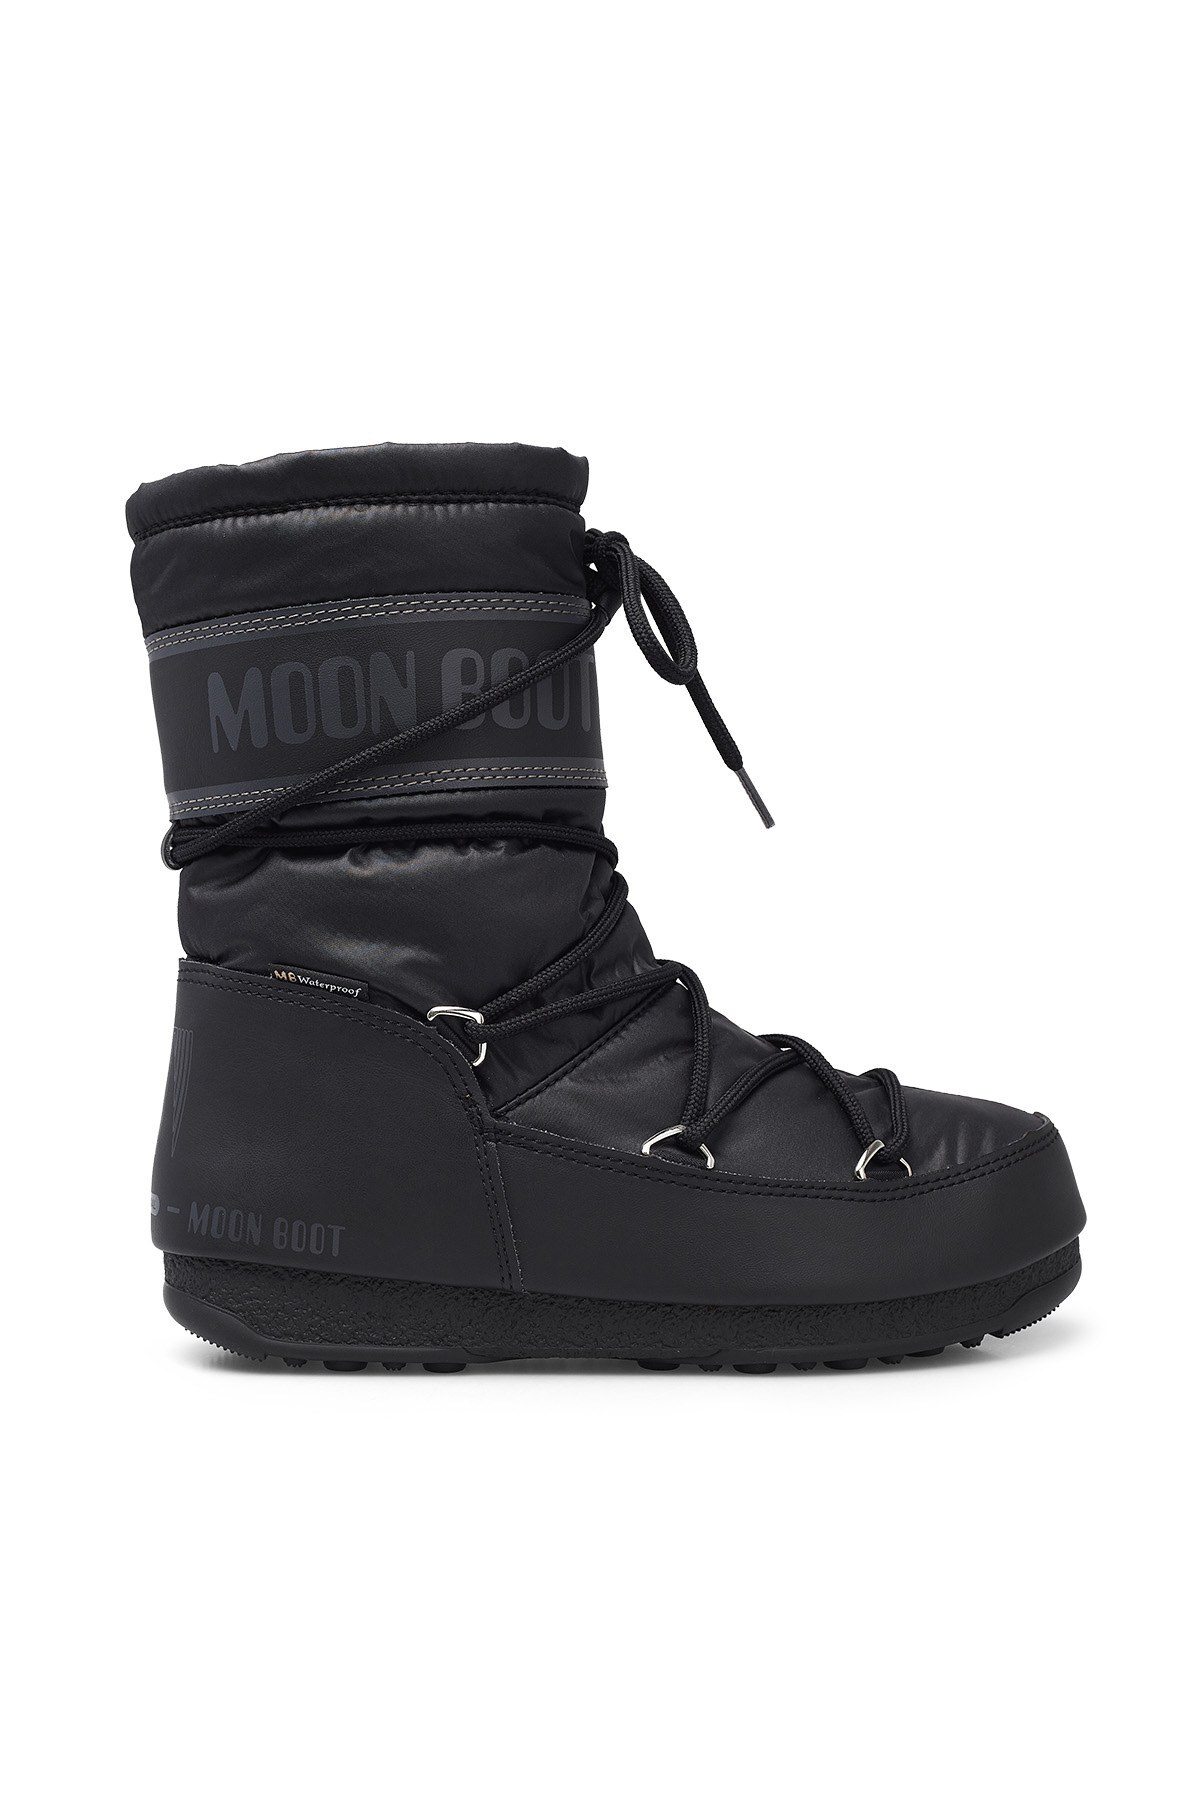 Moon Boot/SİYAH/39 Bayan Kar Botu 24009200 001 SİYAH